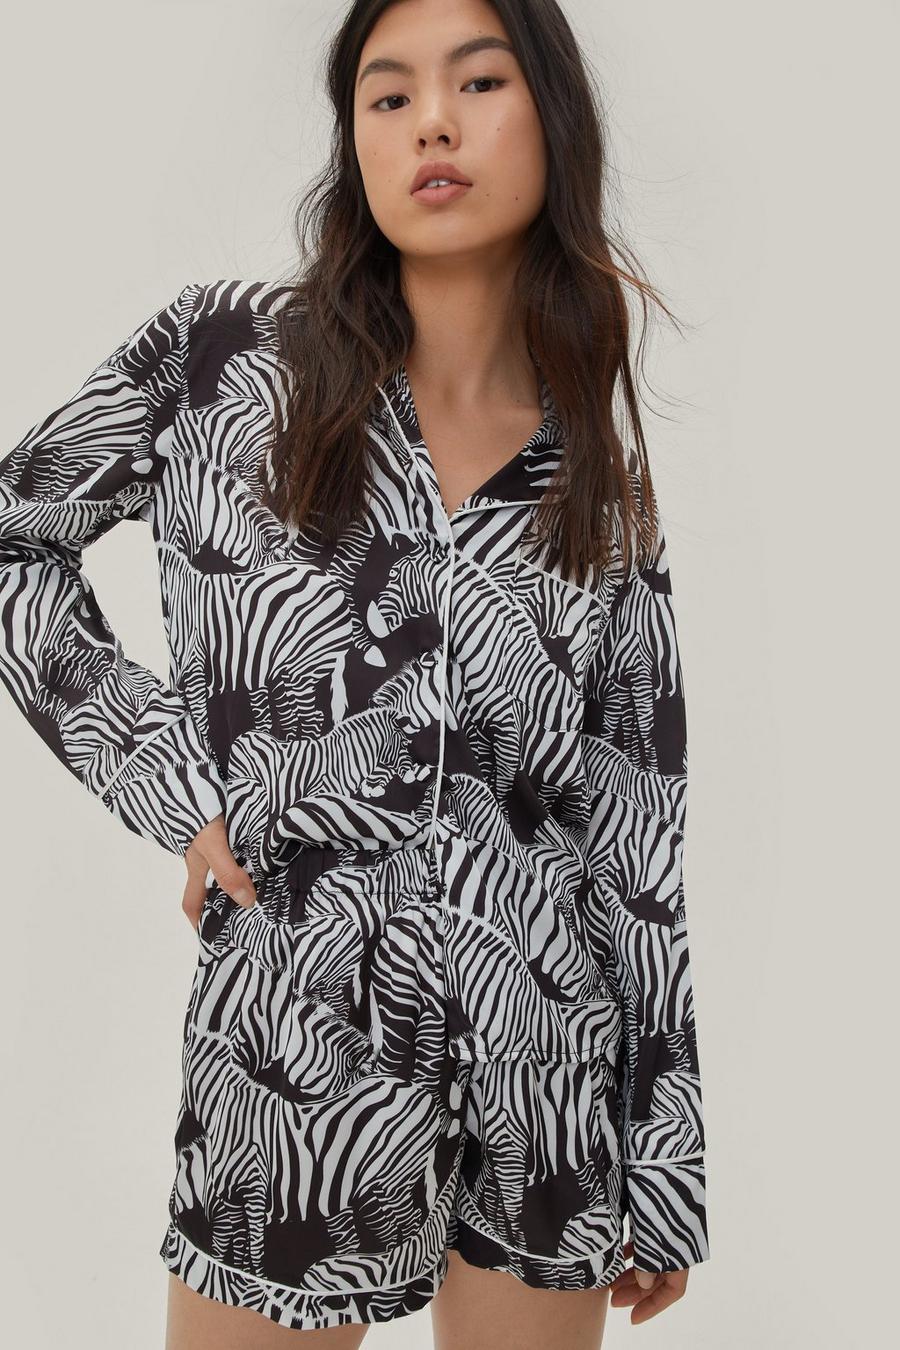 Satin Zebra Design Pajama Shirt and Shorts Set